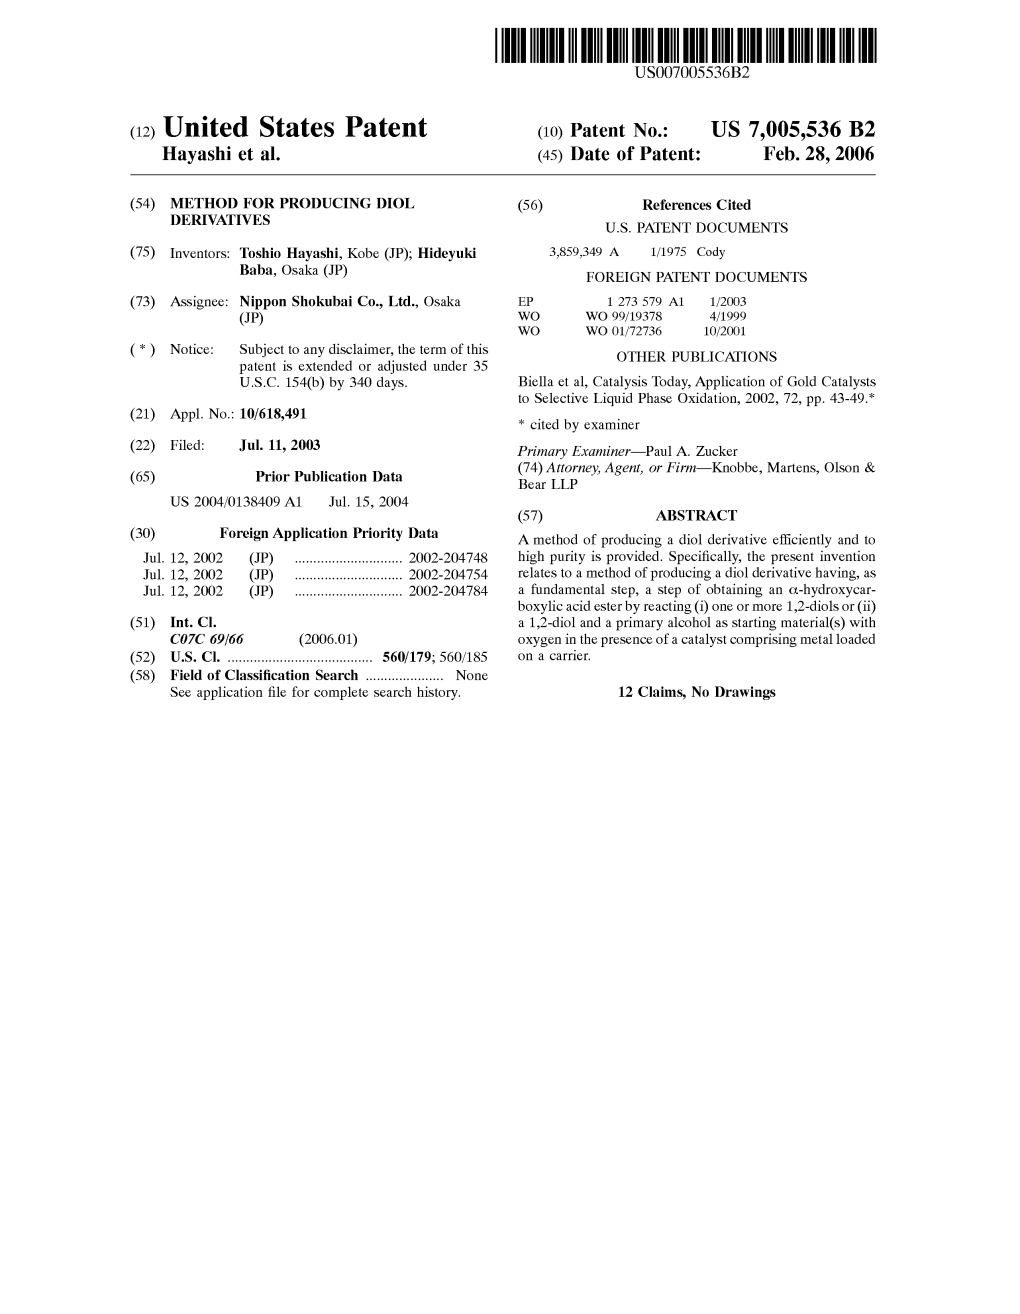 (12) United States Patent (10) Patent No.: US 7,005,536 B2 Hayashi Et Al